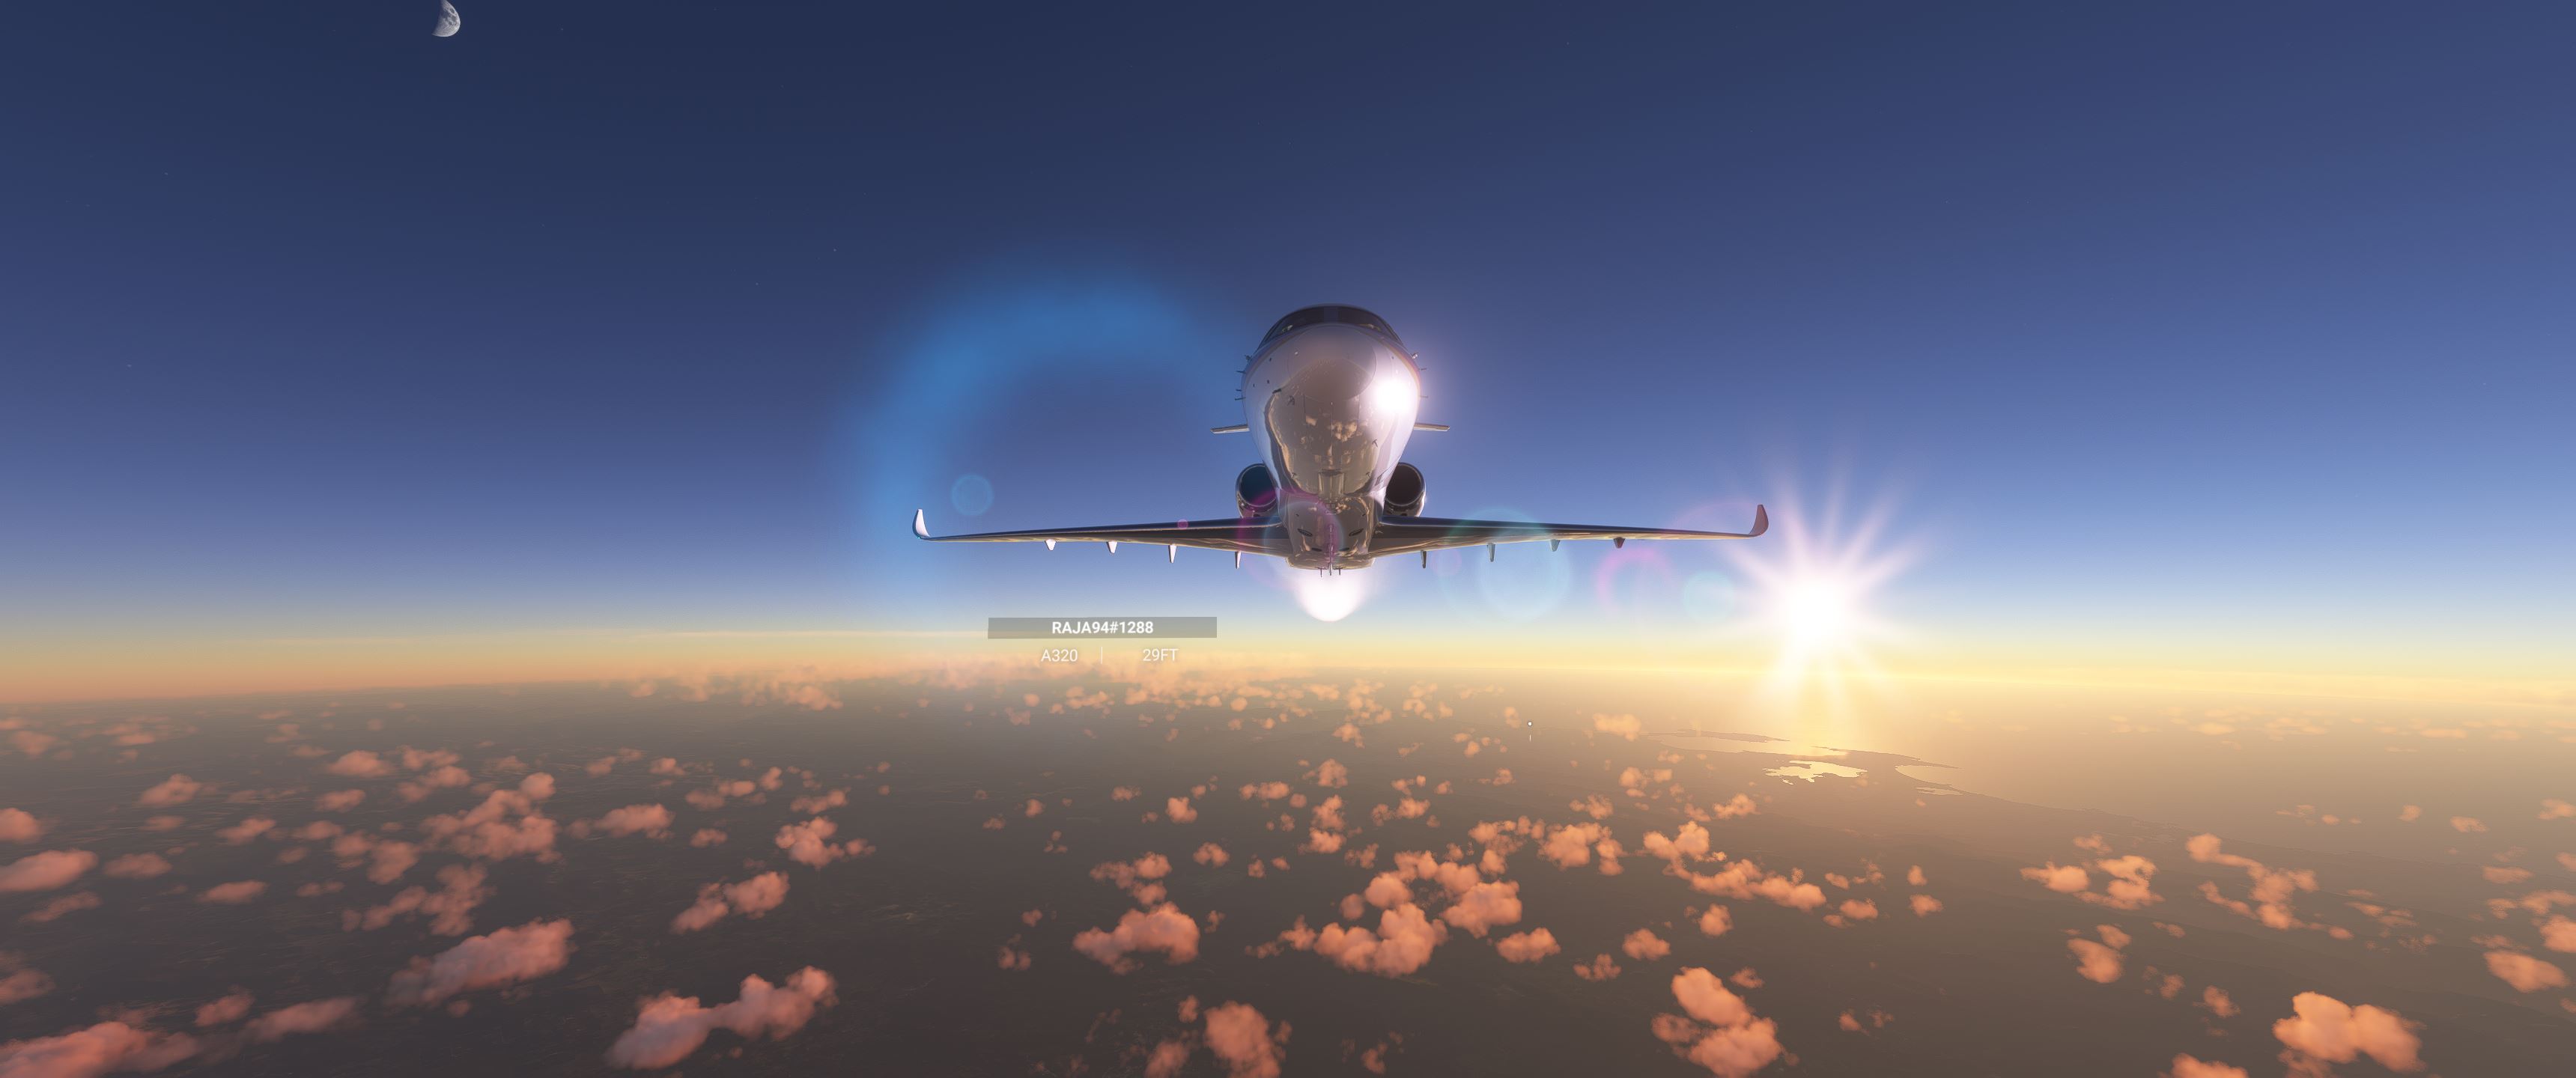 2022-09-18 22_00_51-Microsoft Flight Simulator - 1.26.5.0.jpg